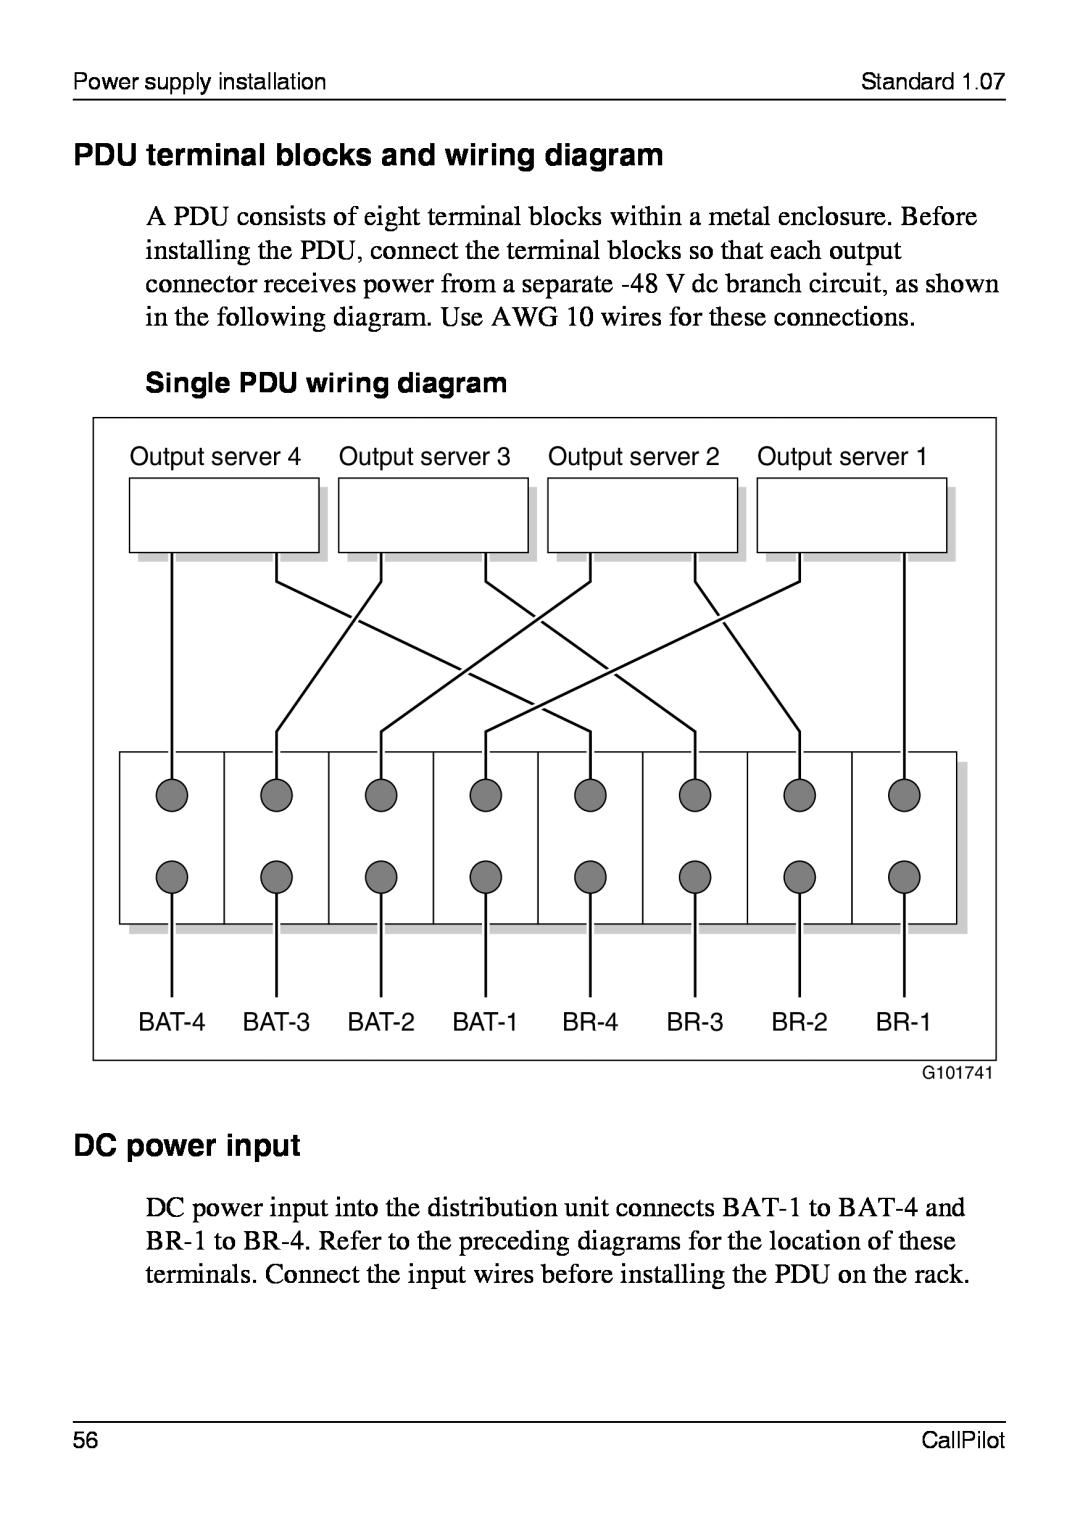 Nortel Networks 1002rp manual PDU terminal blocks and wiring diagram, DC power input, Single PDU wiring diagram 